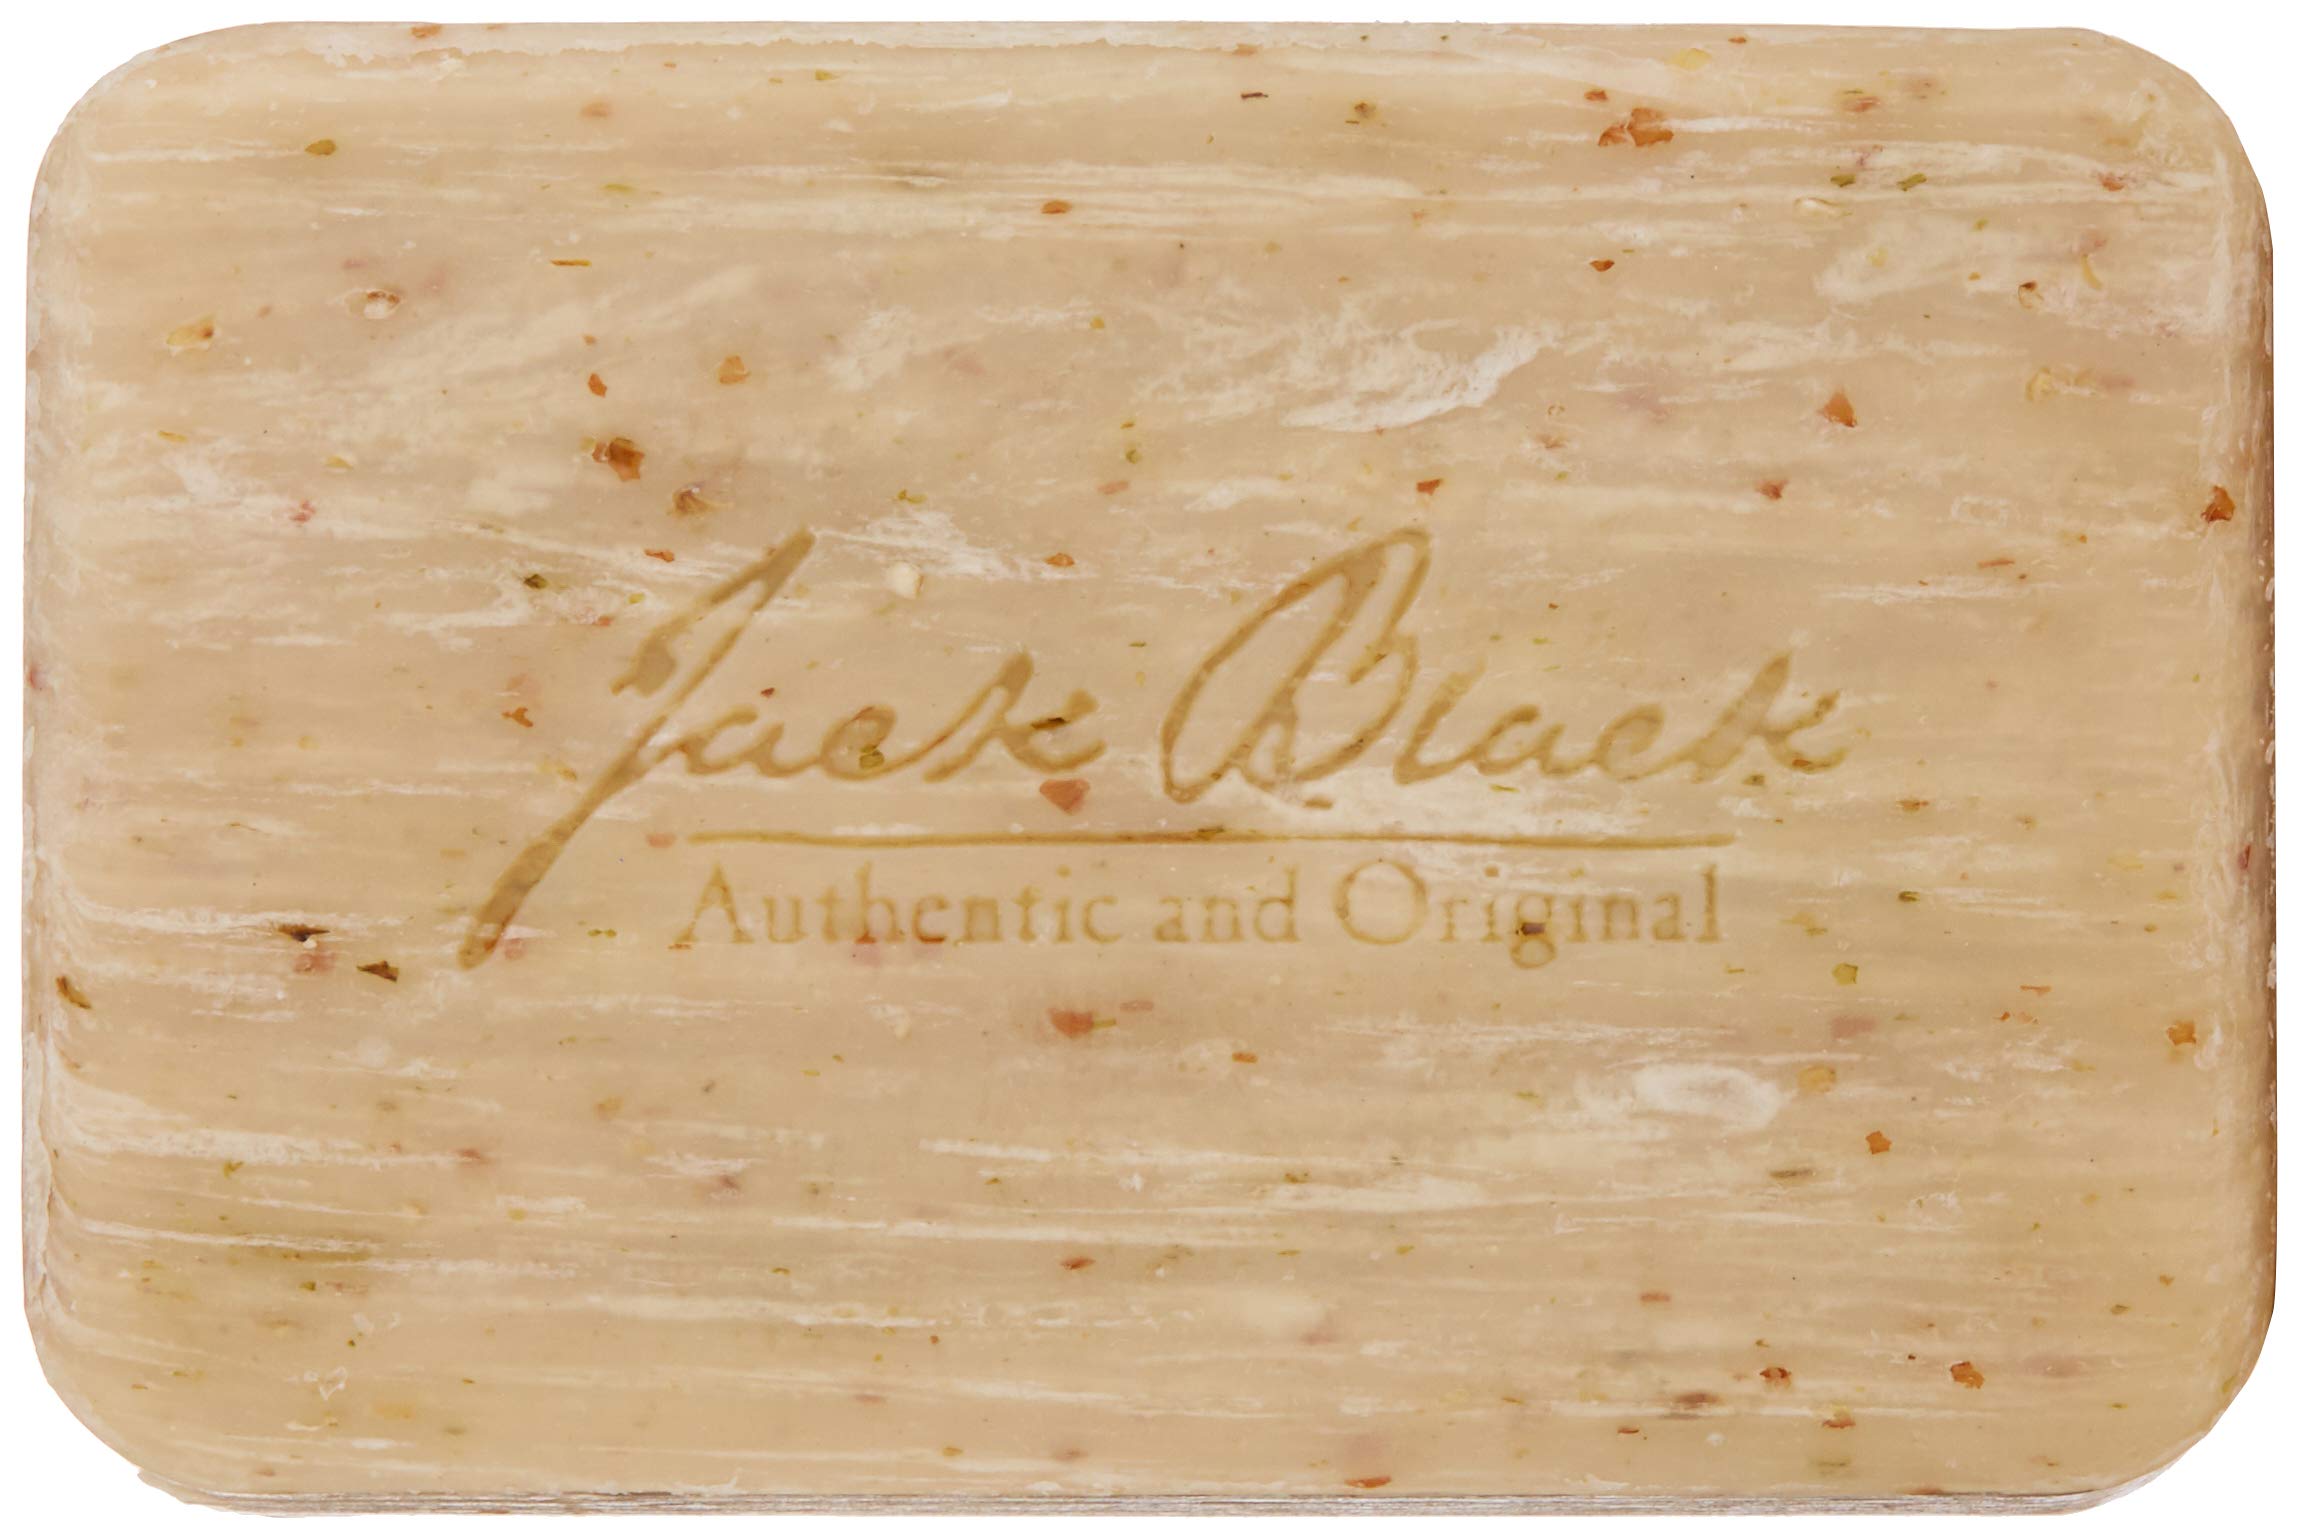 Jack Black - Turbo Body Bar Scrubbing Soap, 6 oz - Men's Soap with Blue Lotus and Lava Rock